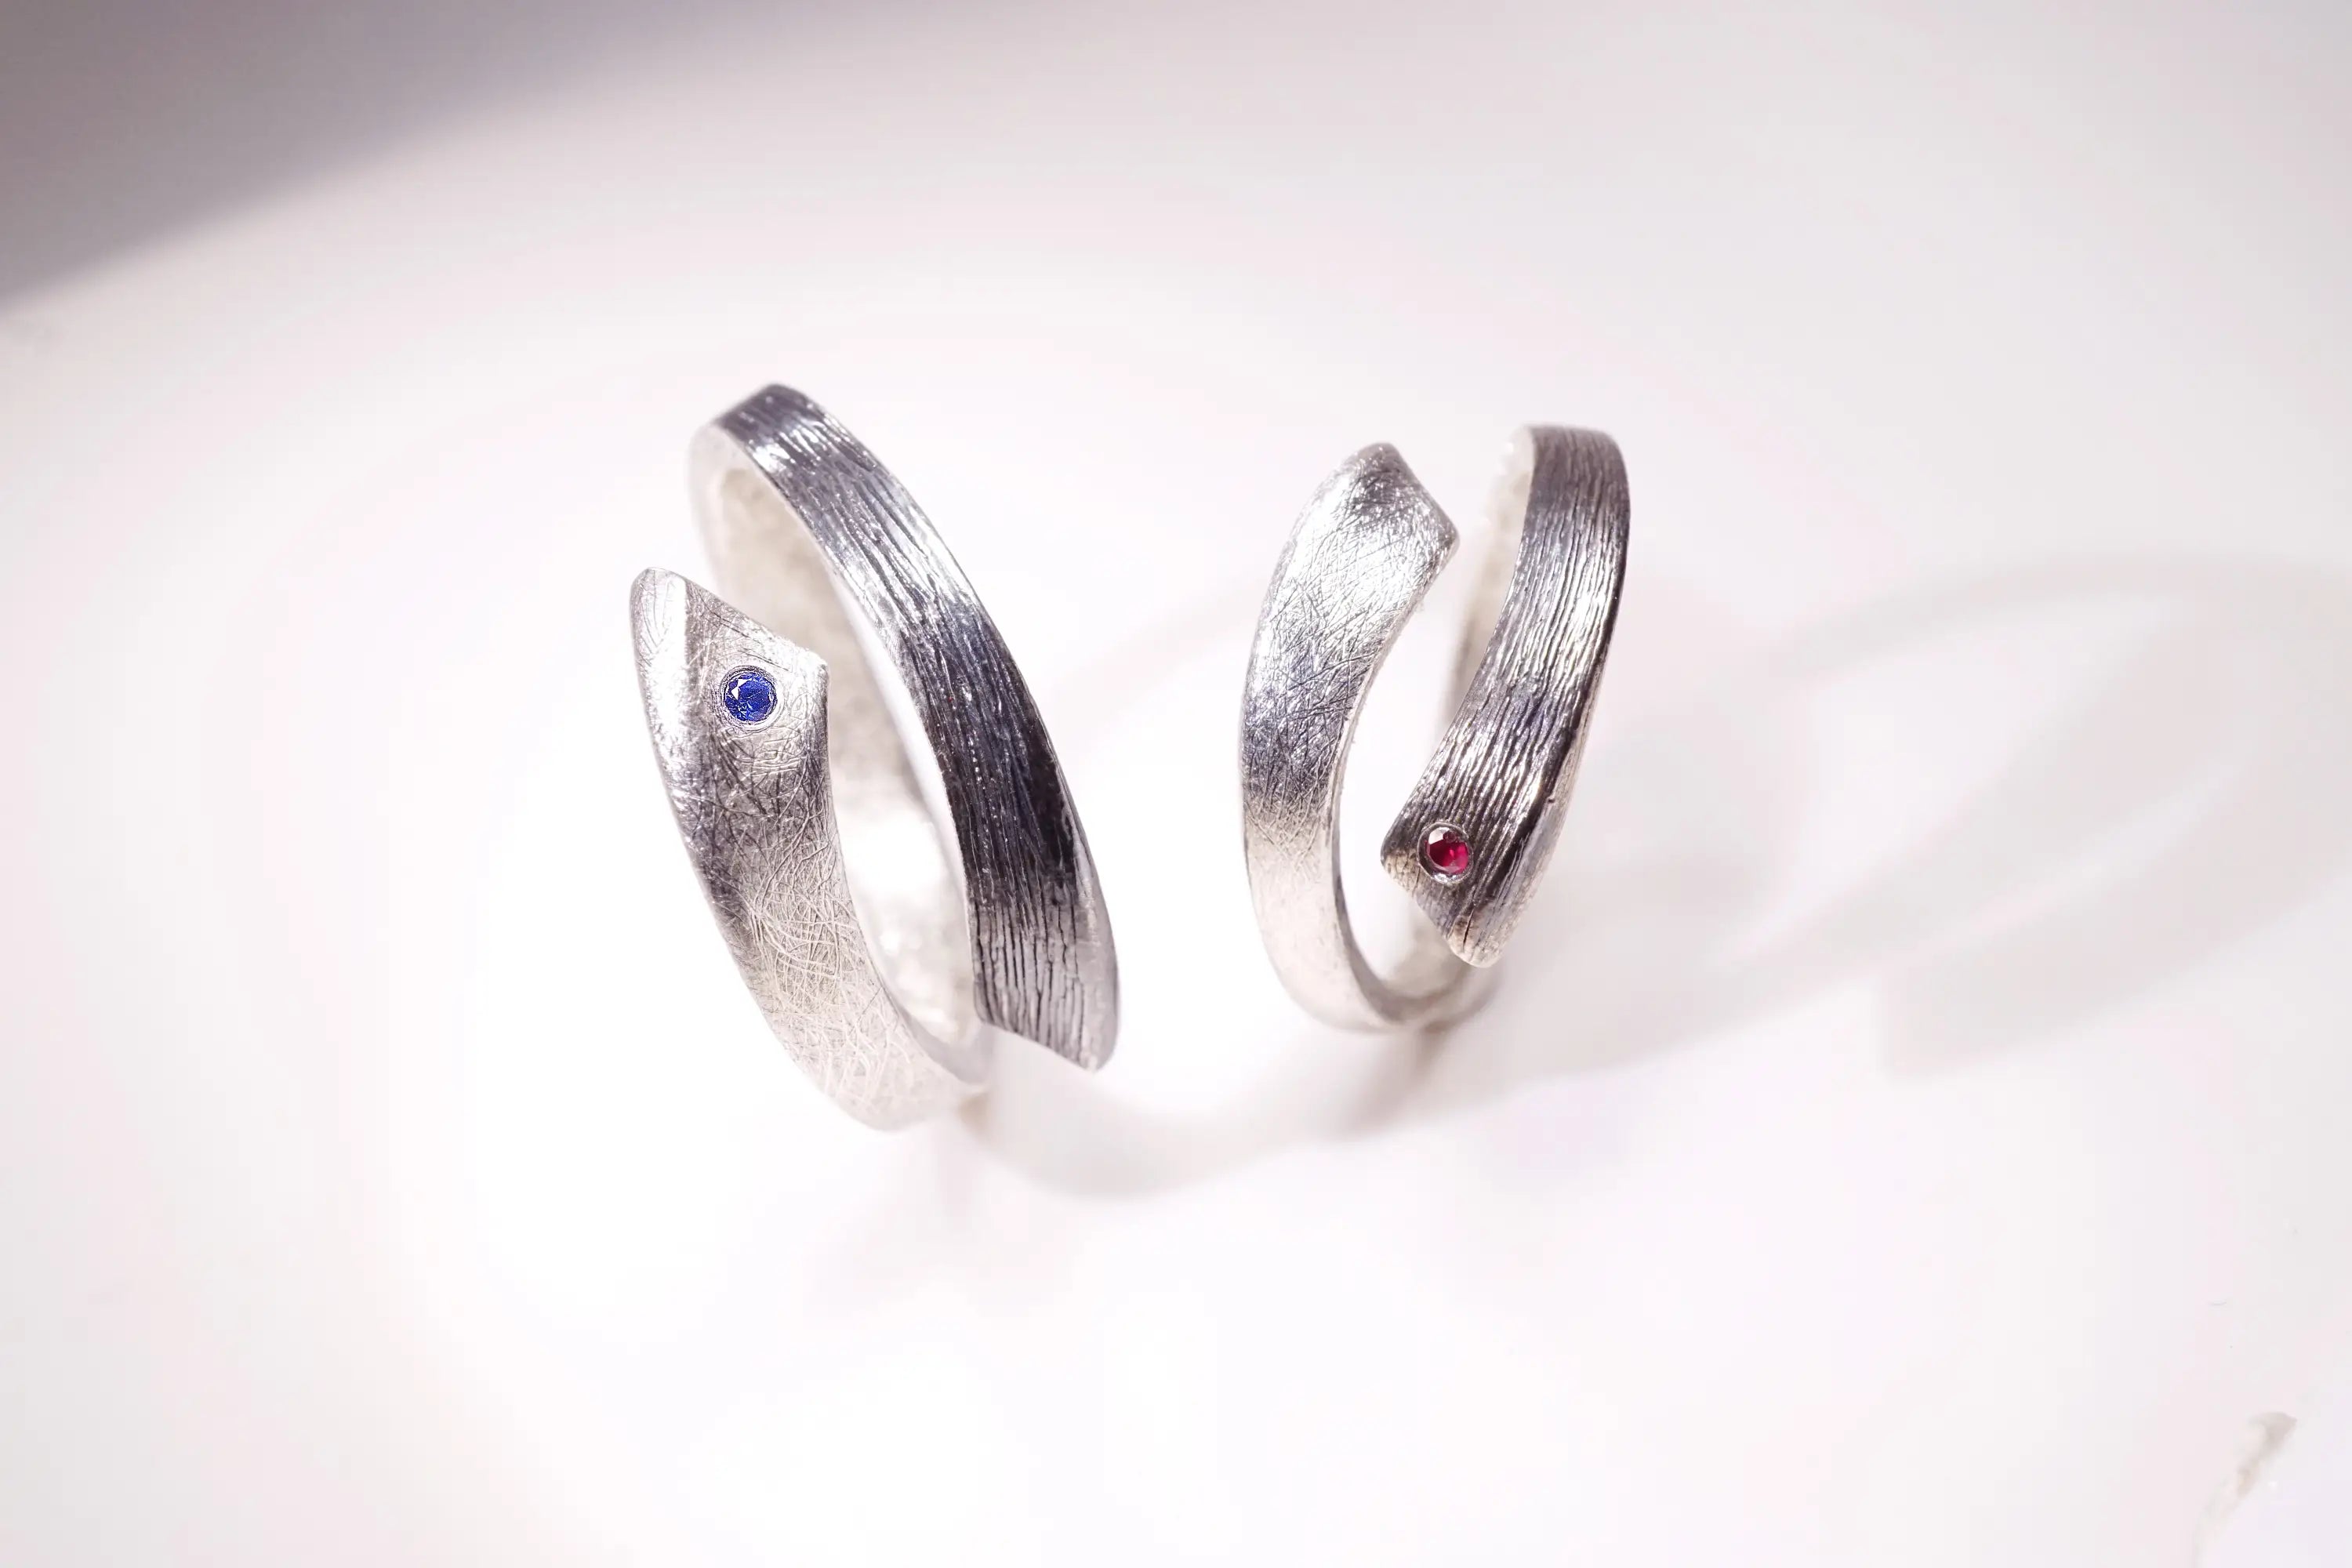 Chia Jewelry婚戒對戒客製化，鑲紅寶藍寶，黑白雙色獨特設計簡約款式